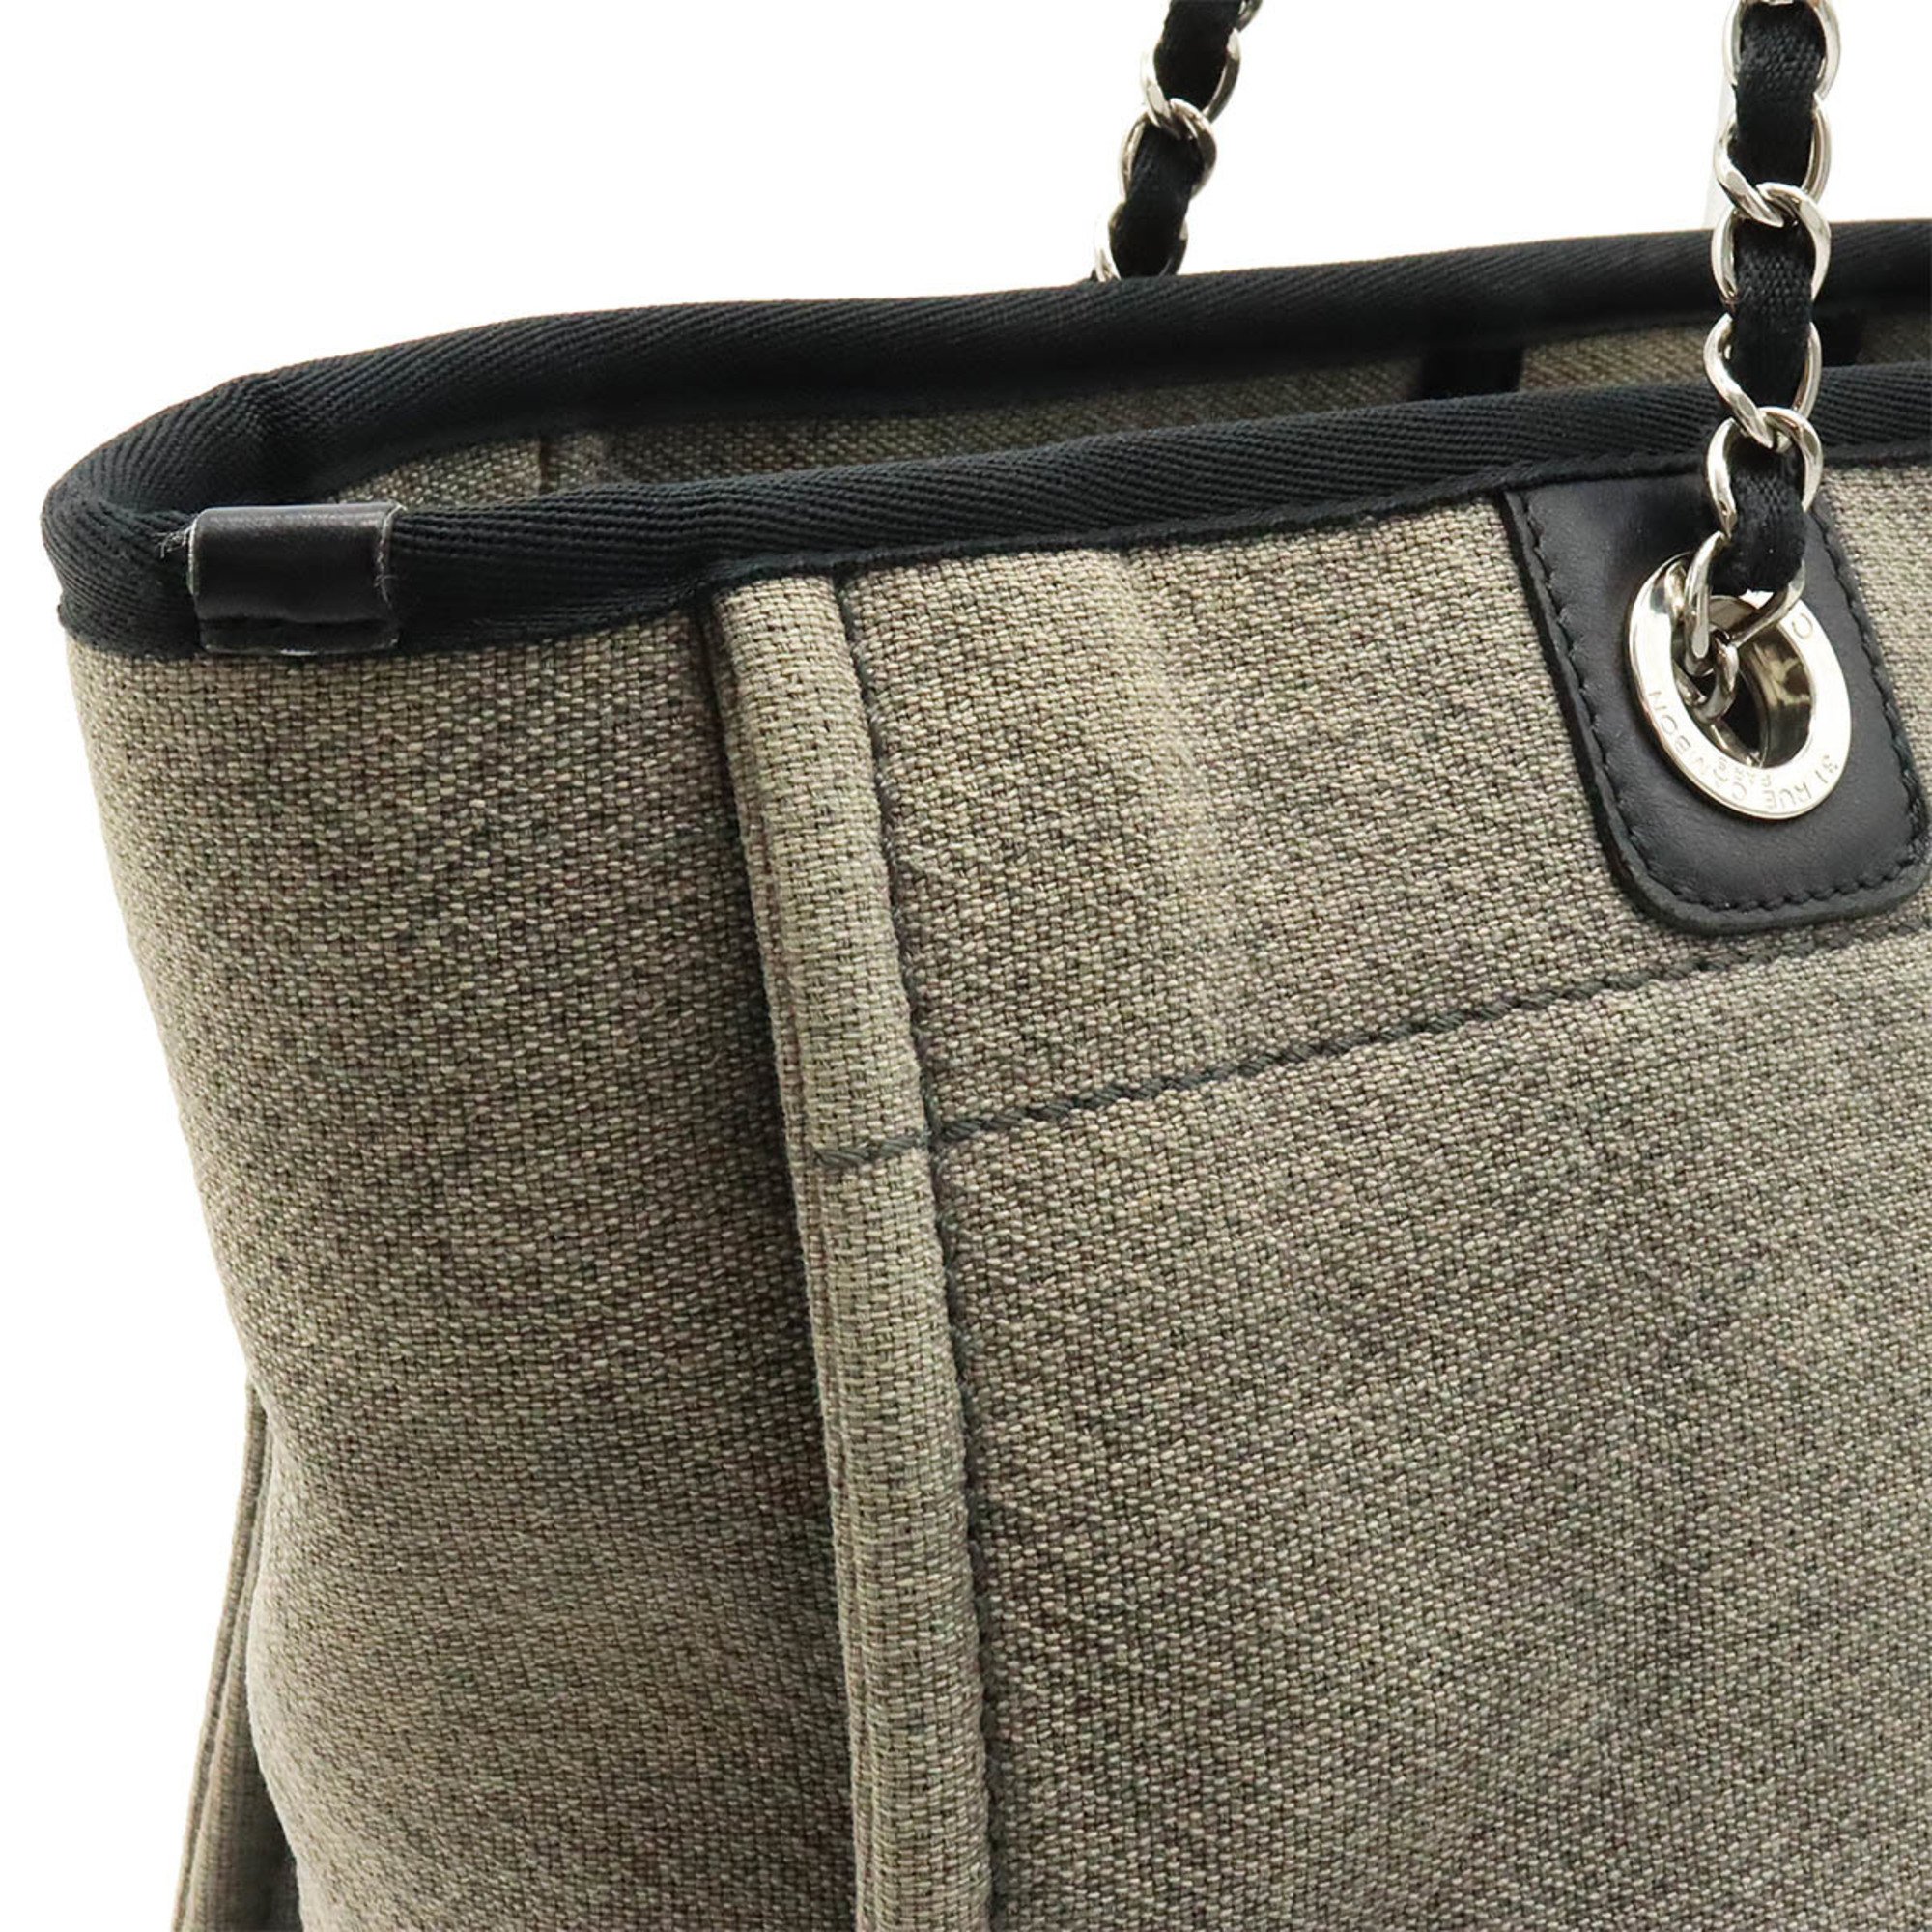 CHANEL Deauville Line Medium Tote MM Bag Shoulder Chain Gray Black A67001